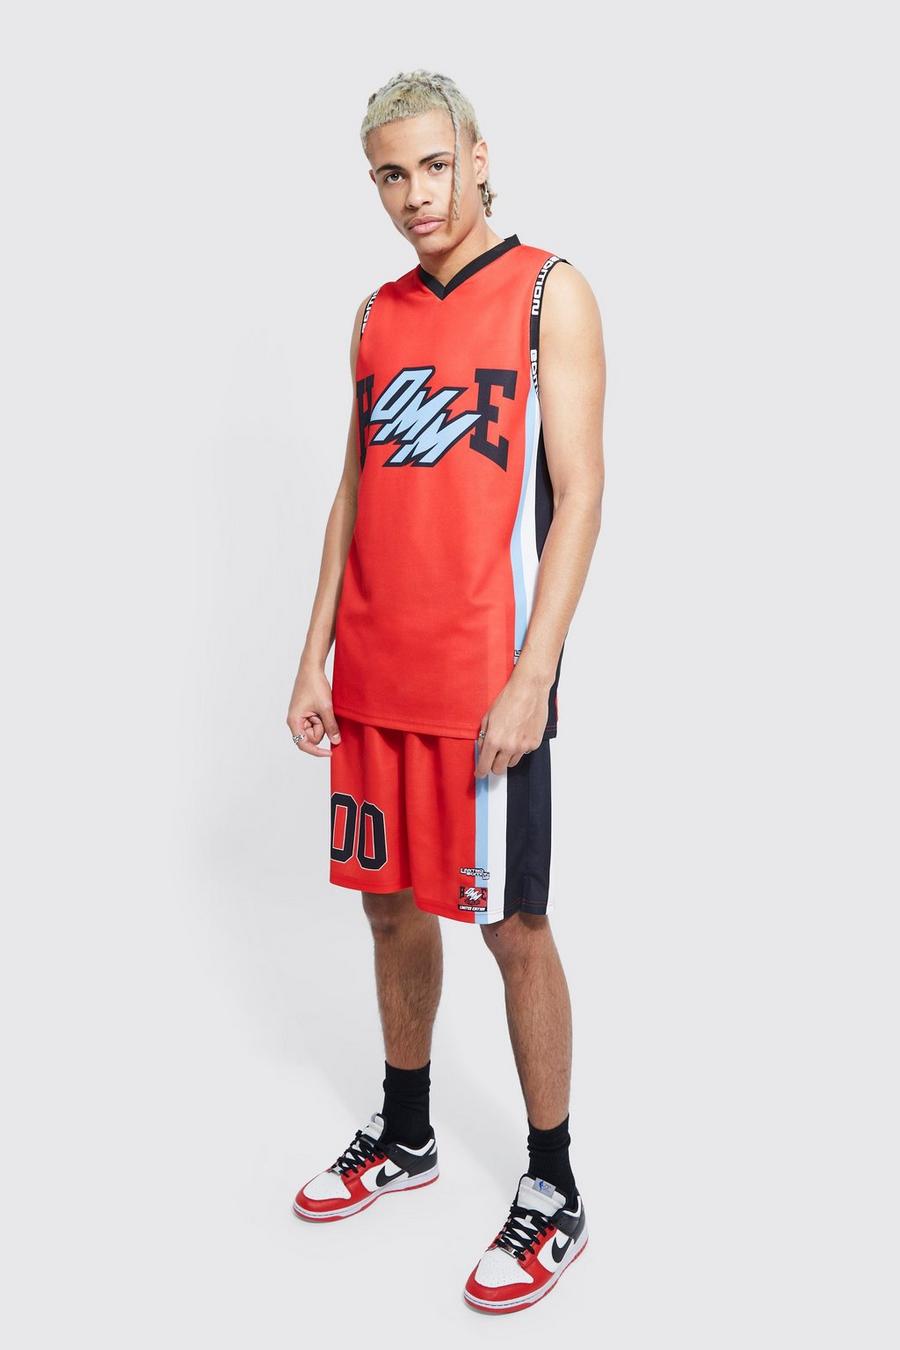 Nike Men's Jordan DNA Distorted Basketball Jersey (Gym Red, Medium